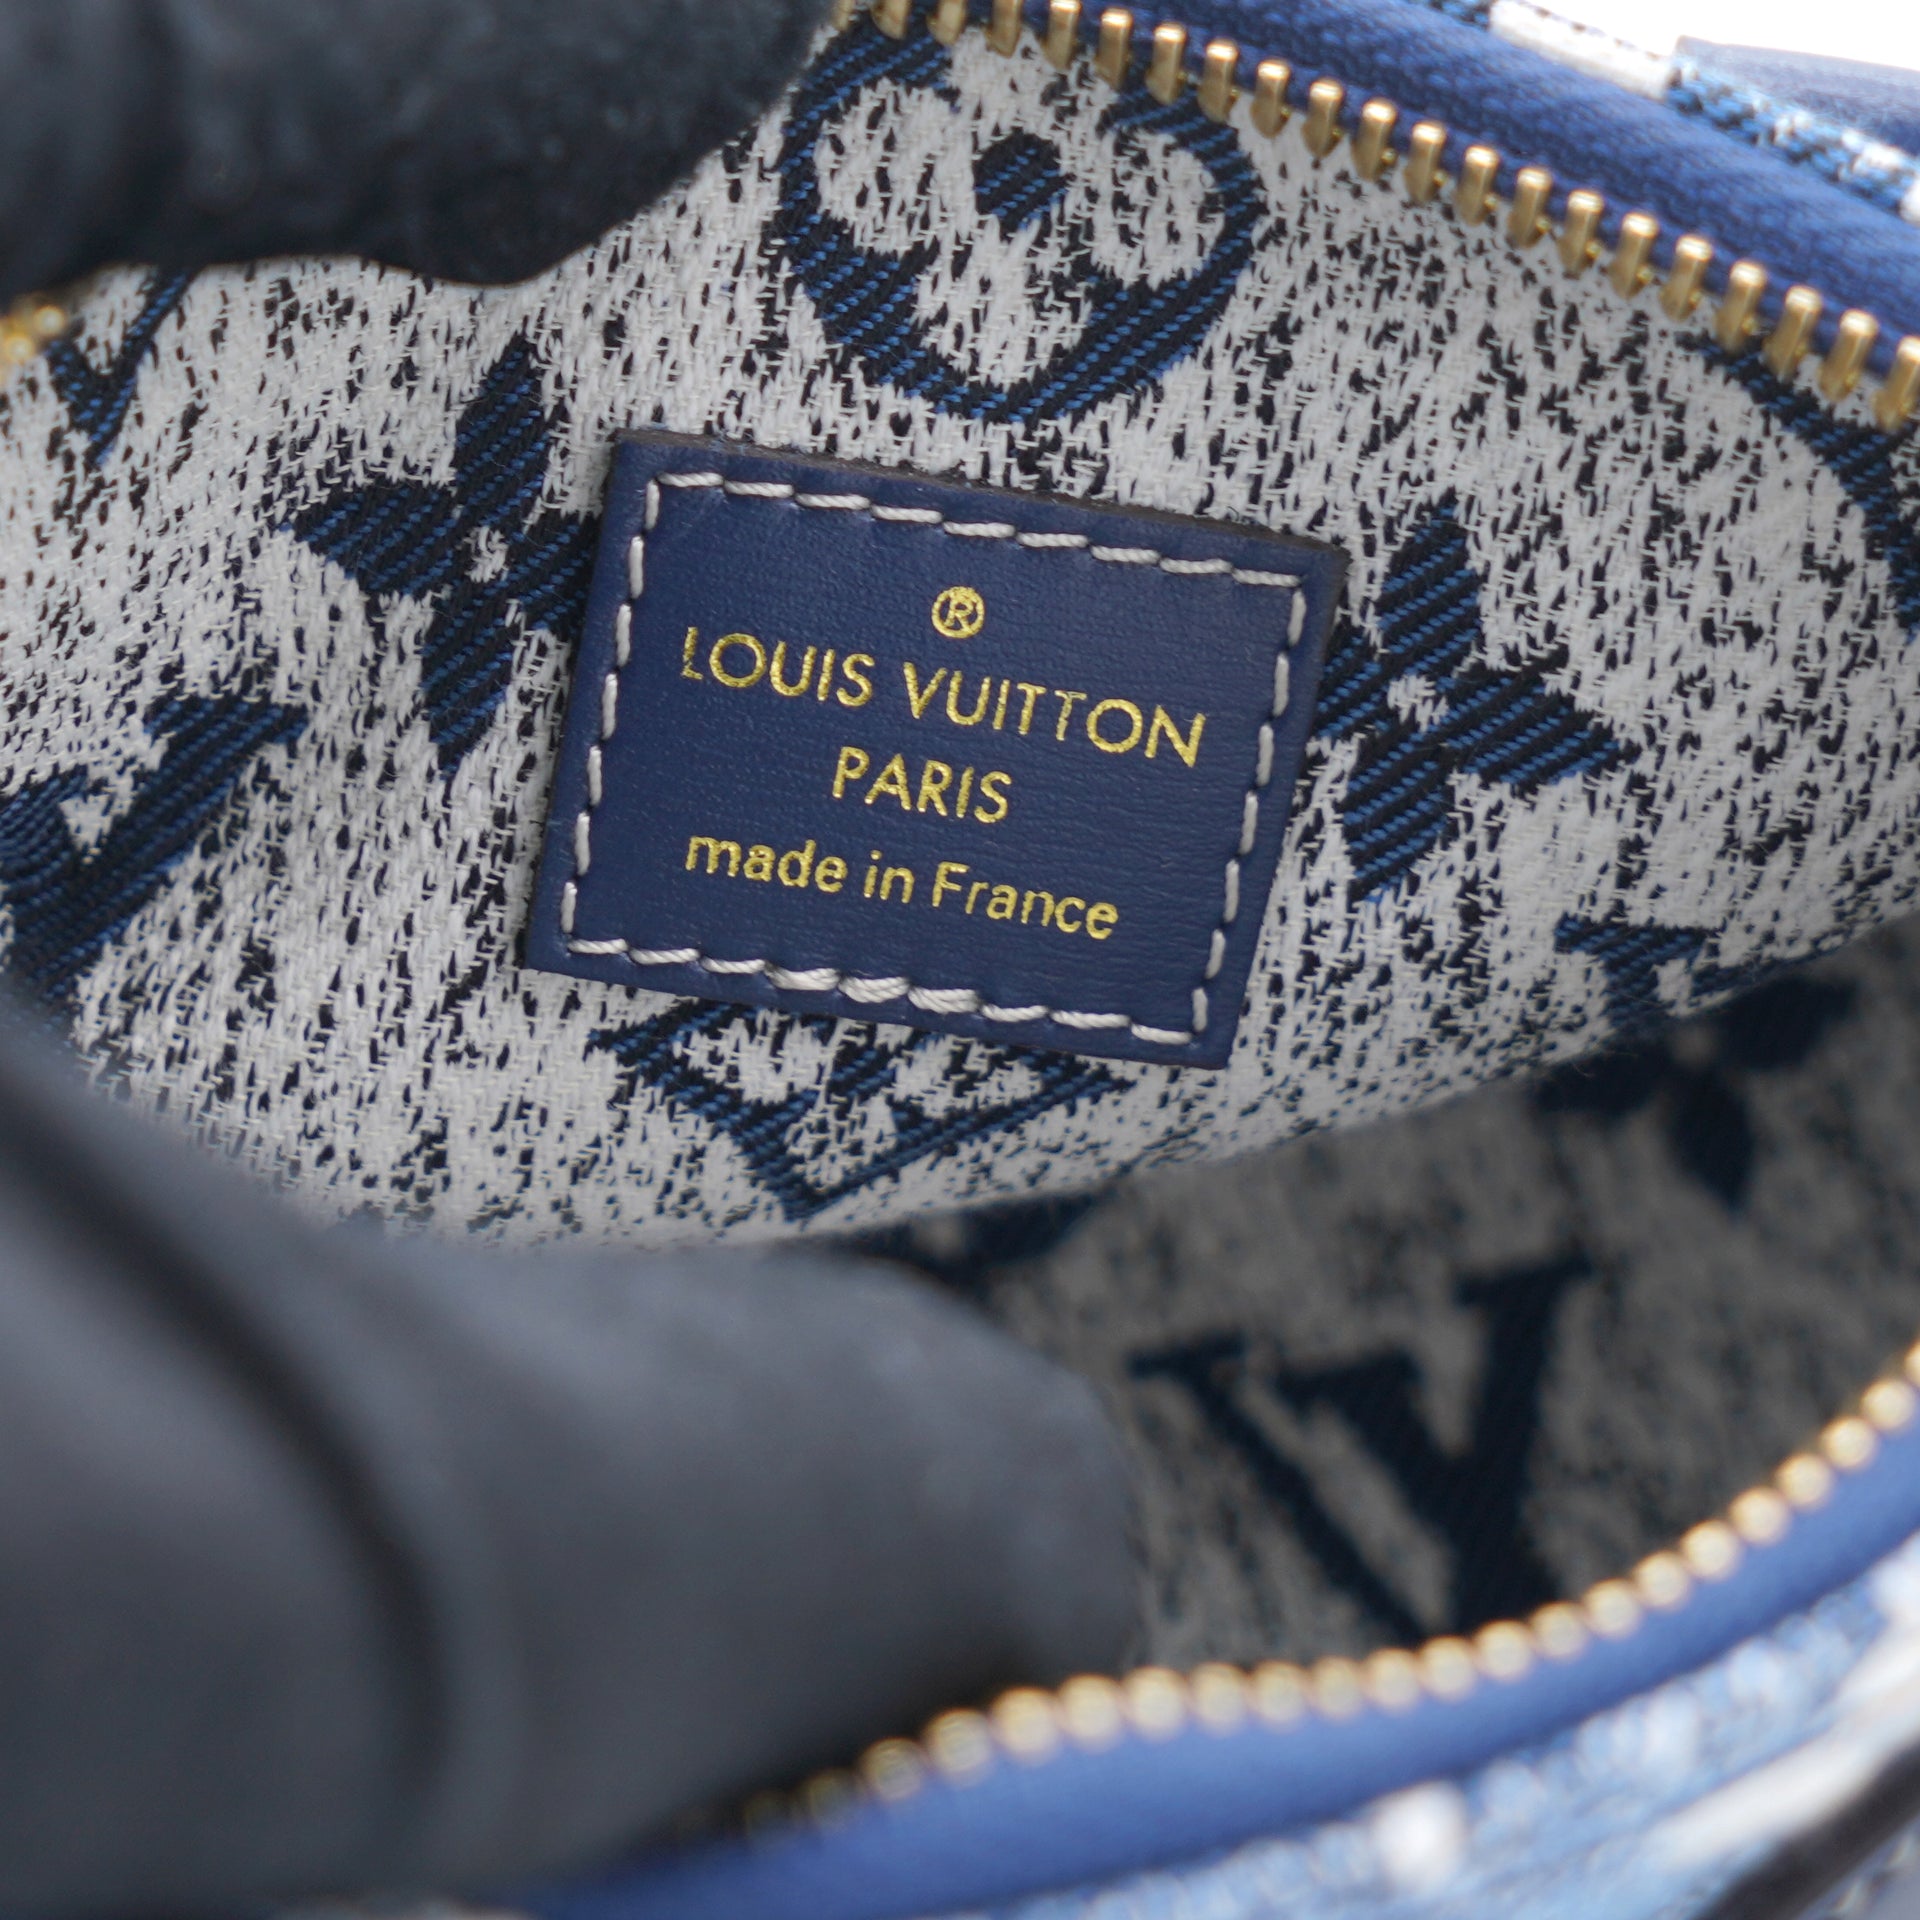 Louis Vuitton Authenticated Jean